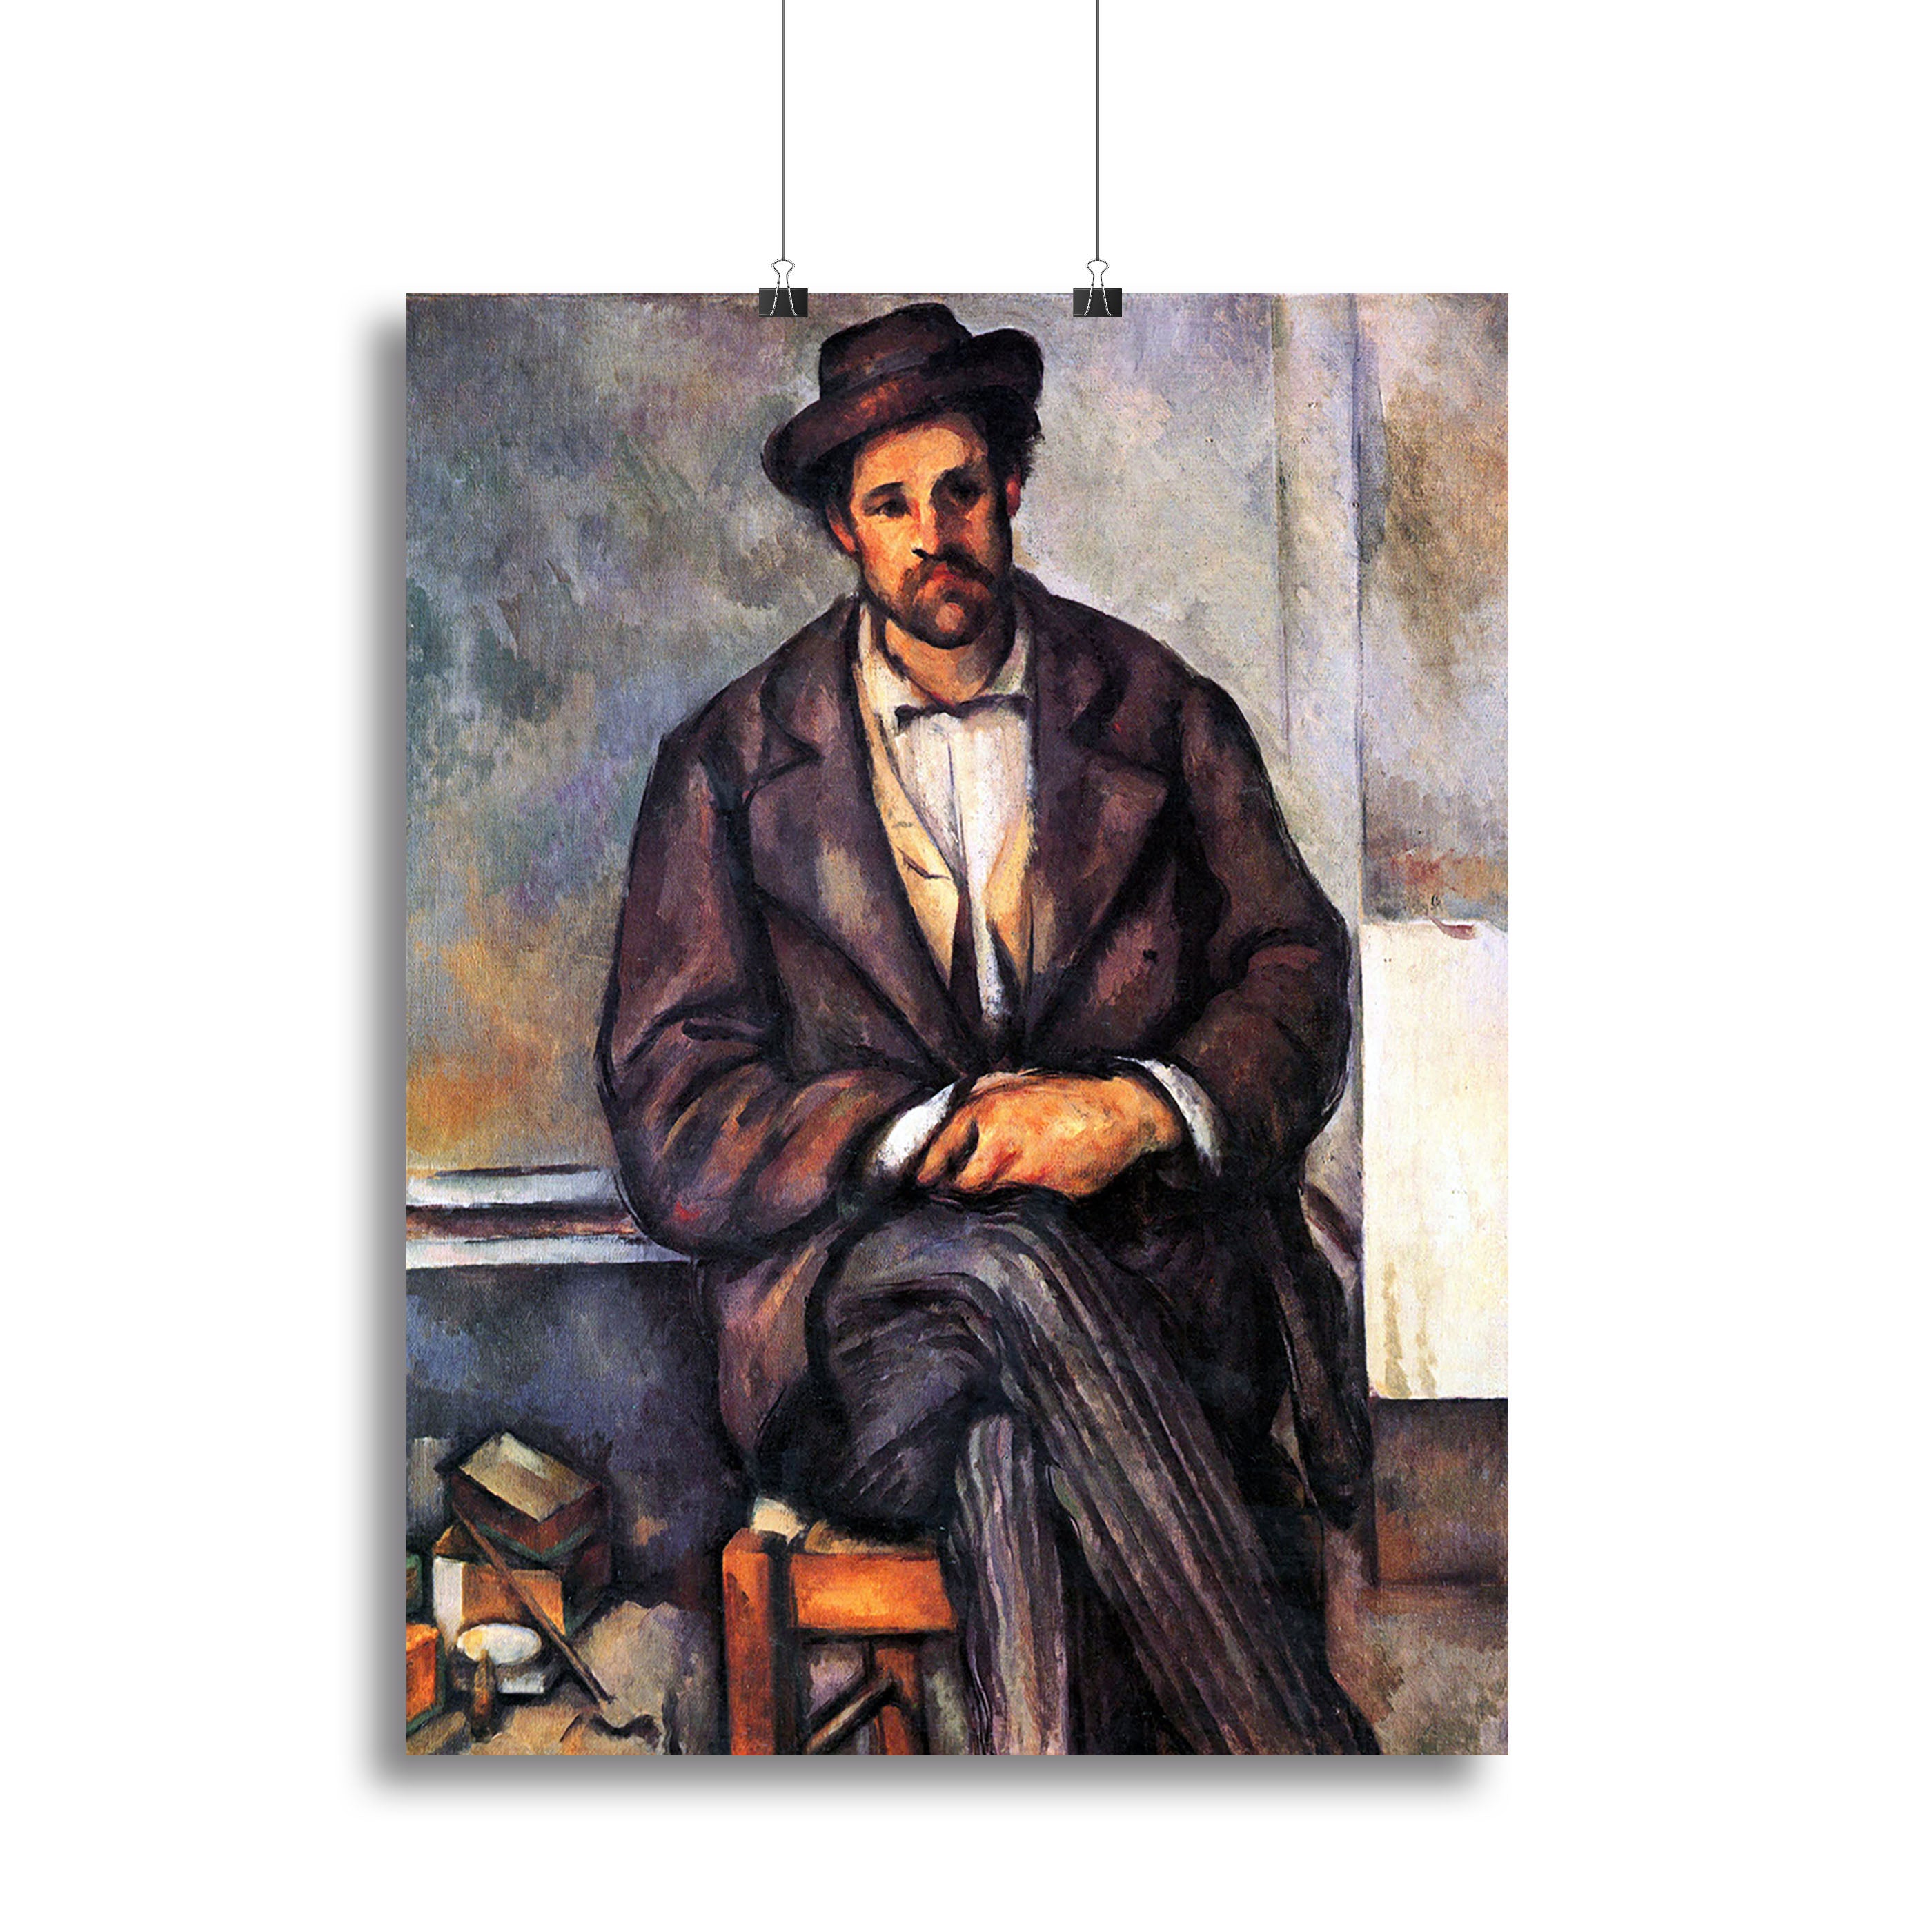 Sitting Farmer by Cezanne Canvas Print or Poster - Canvas Art Rocks - 2